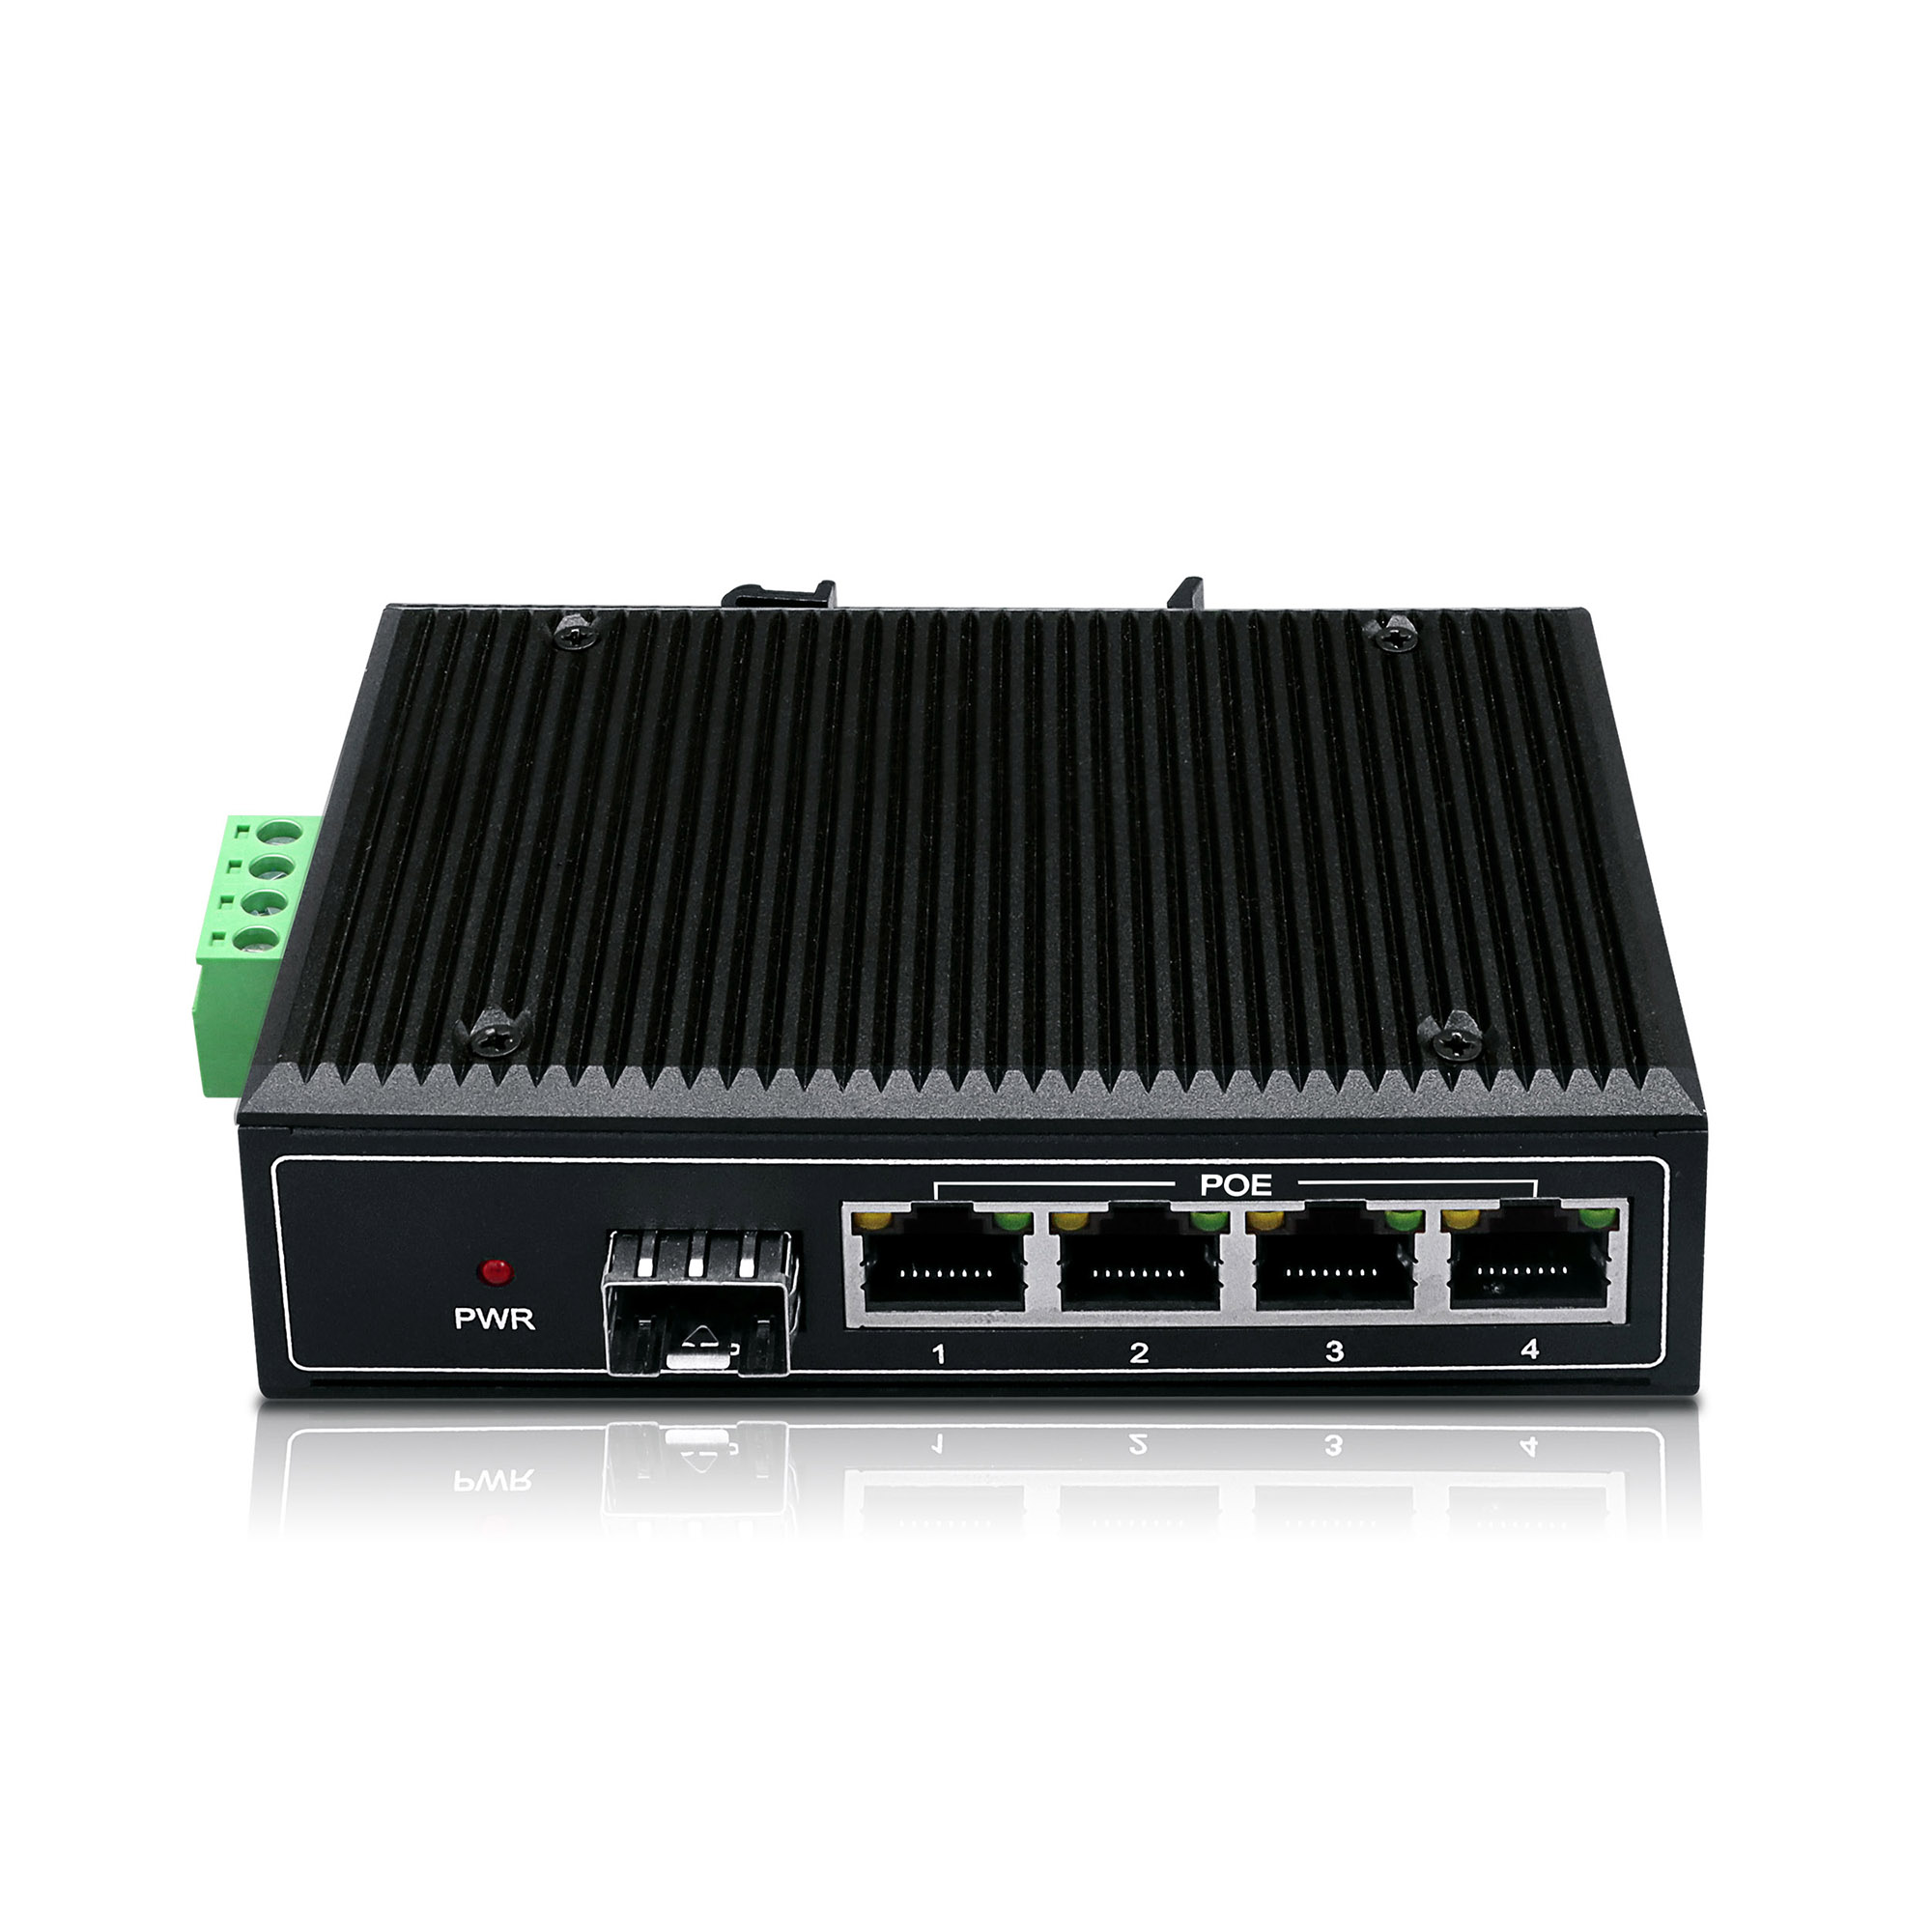 YN-SG105SP4 Industrial Ethernet PoE Switch